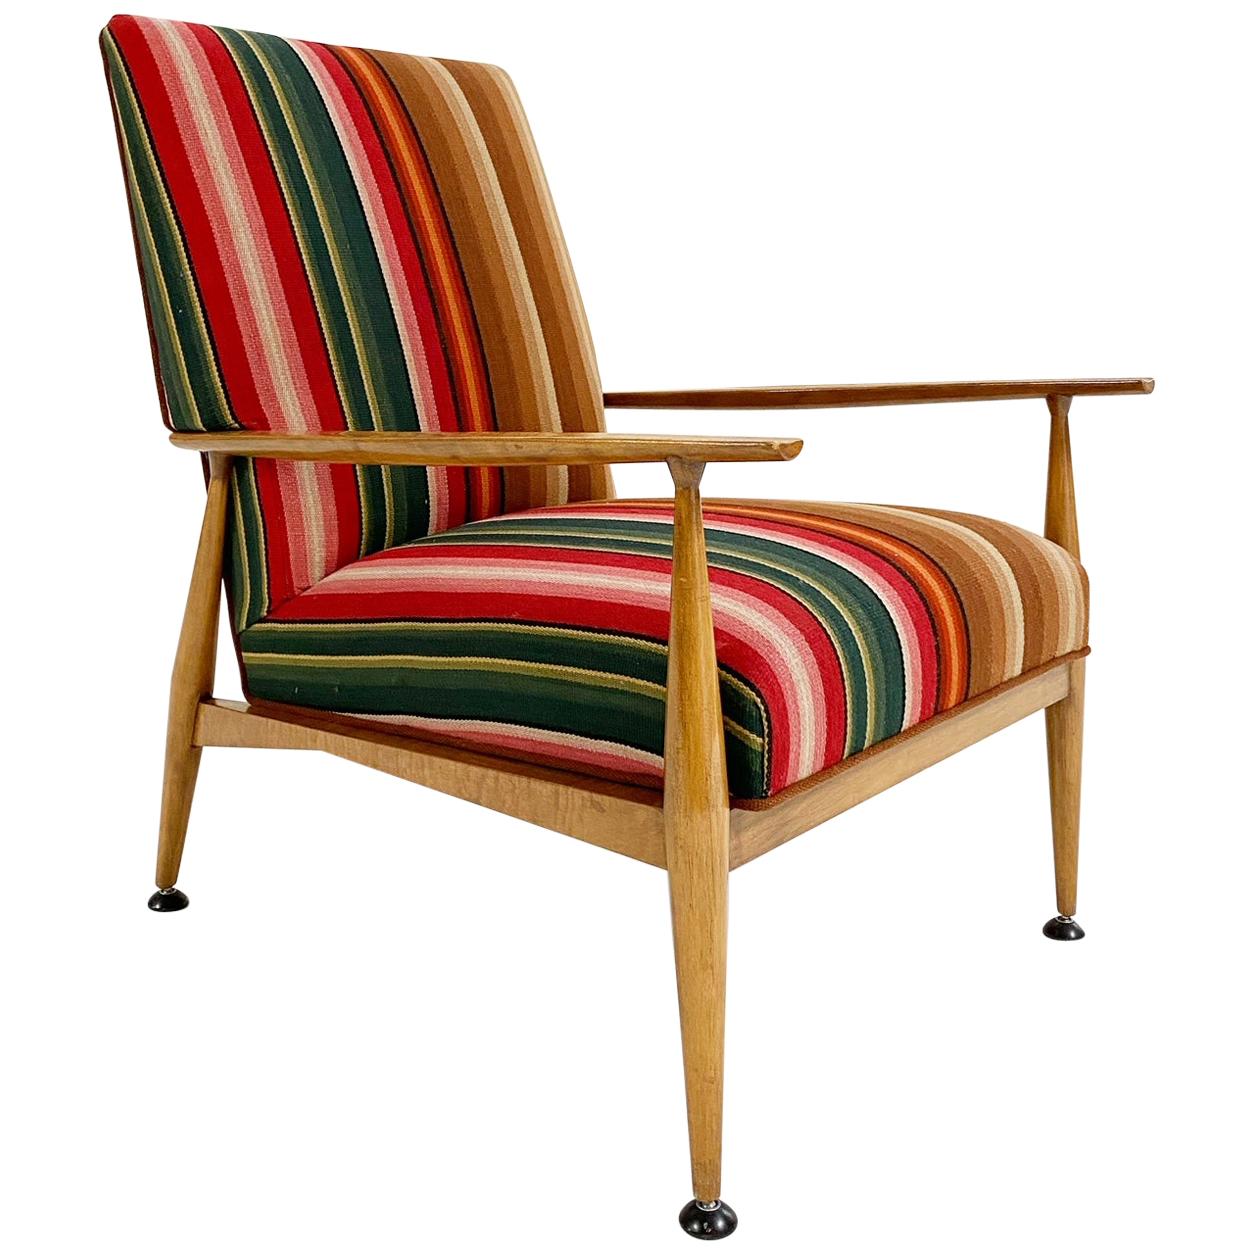 Paul McCobb Model 3041 Lounge Chair in vintage Guatemalan Fabric